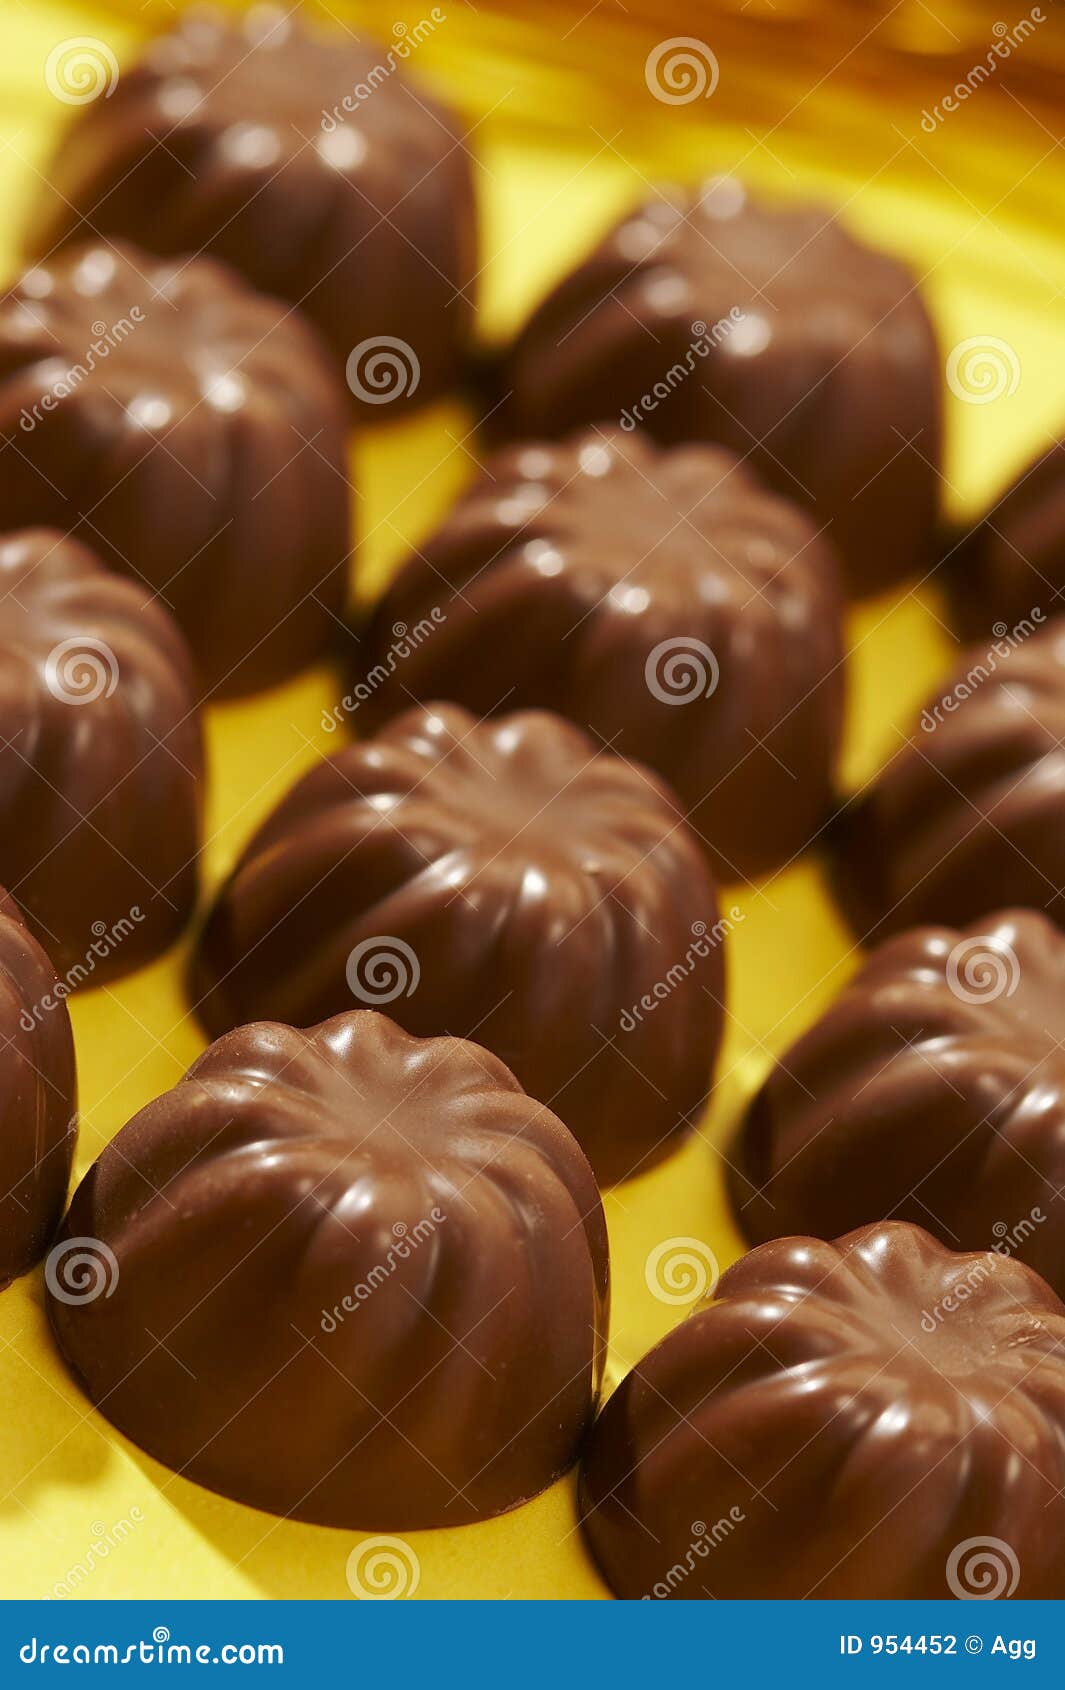 rows appetizing chocolate bonbon